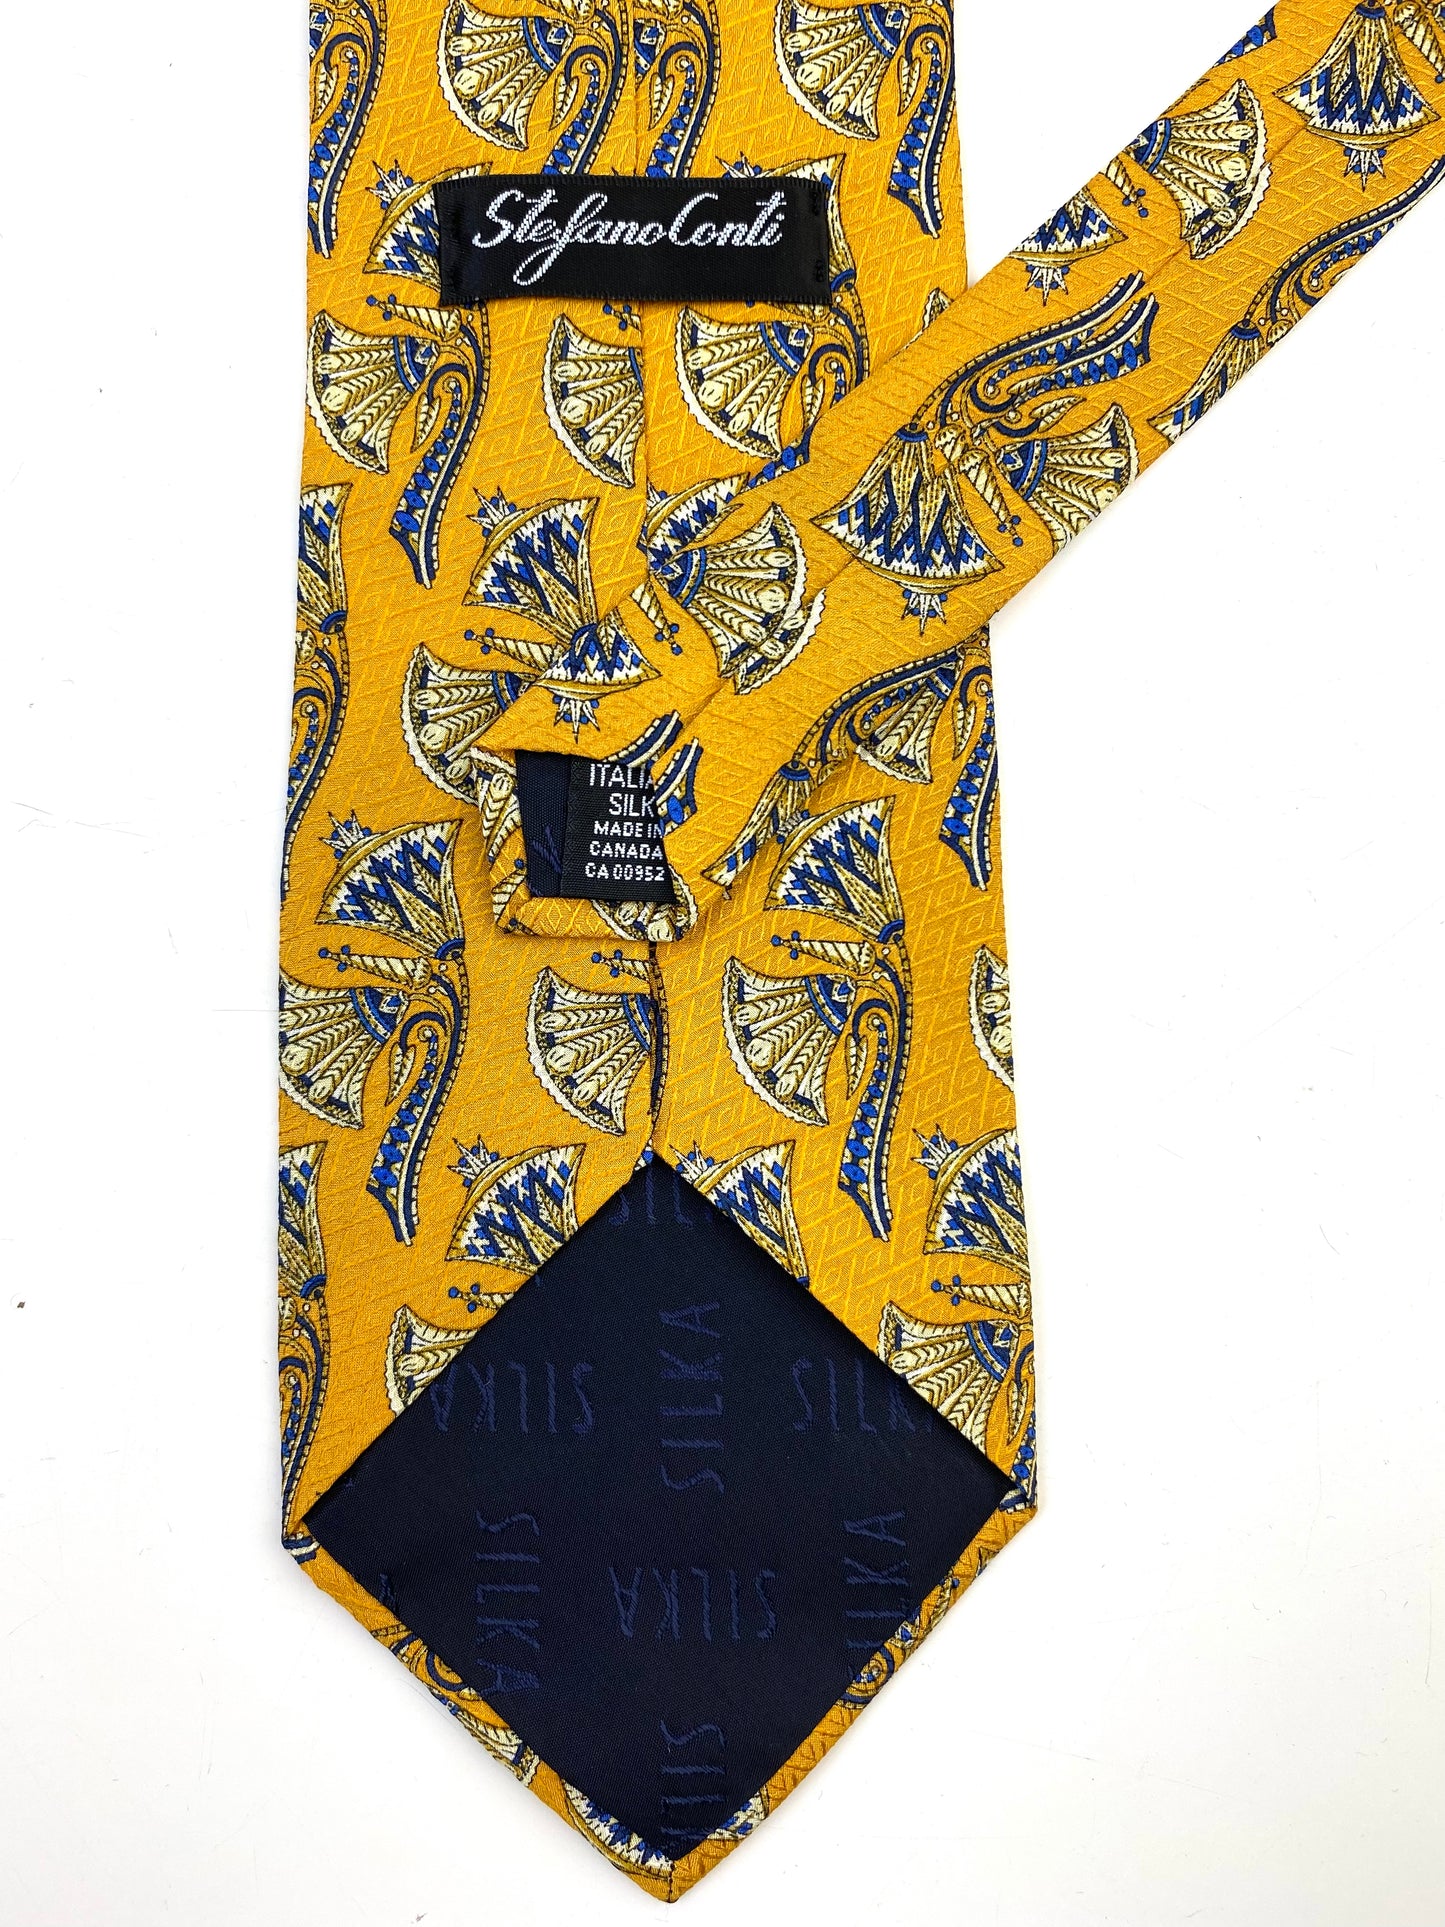 Back and labels of: 90s Deadstock Silk Necktie, Men's Vintage Gold Blue Oriental Pattern Tie, NOS